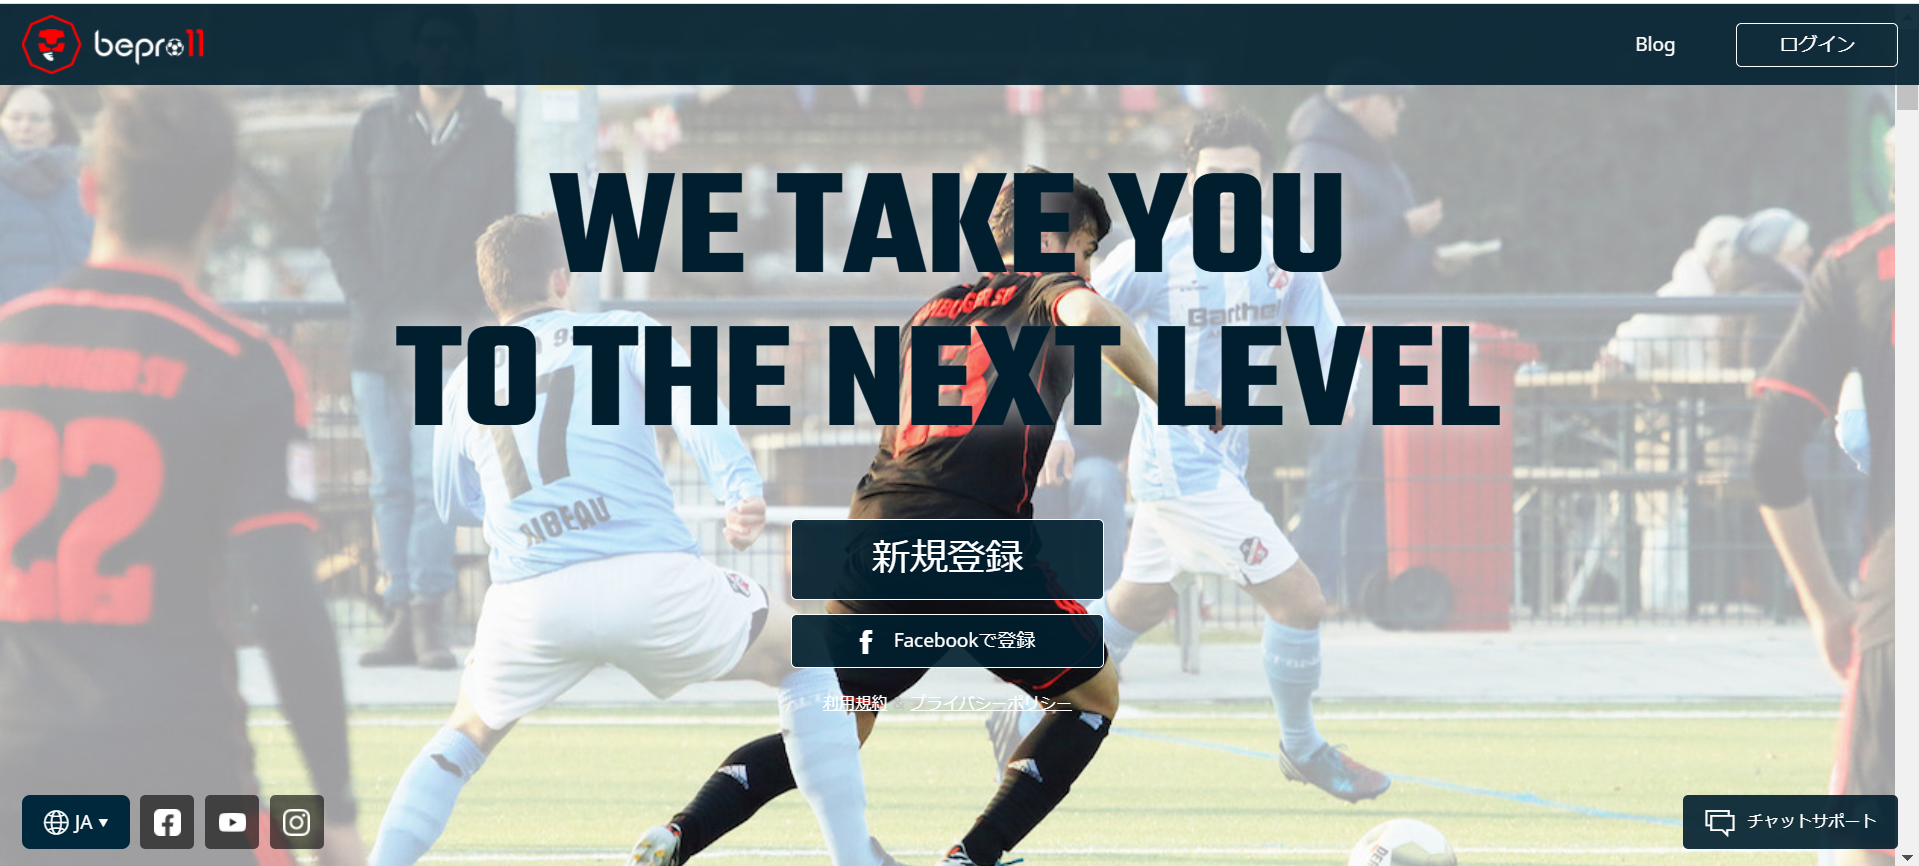 Bepro11 サッカー映像分析プラットフォーム Bepro11 が日本進出 Bepro Japan合同会社のプレスリリース